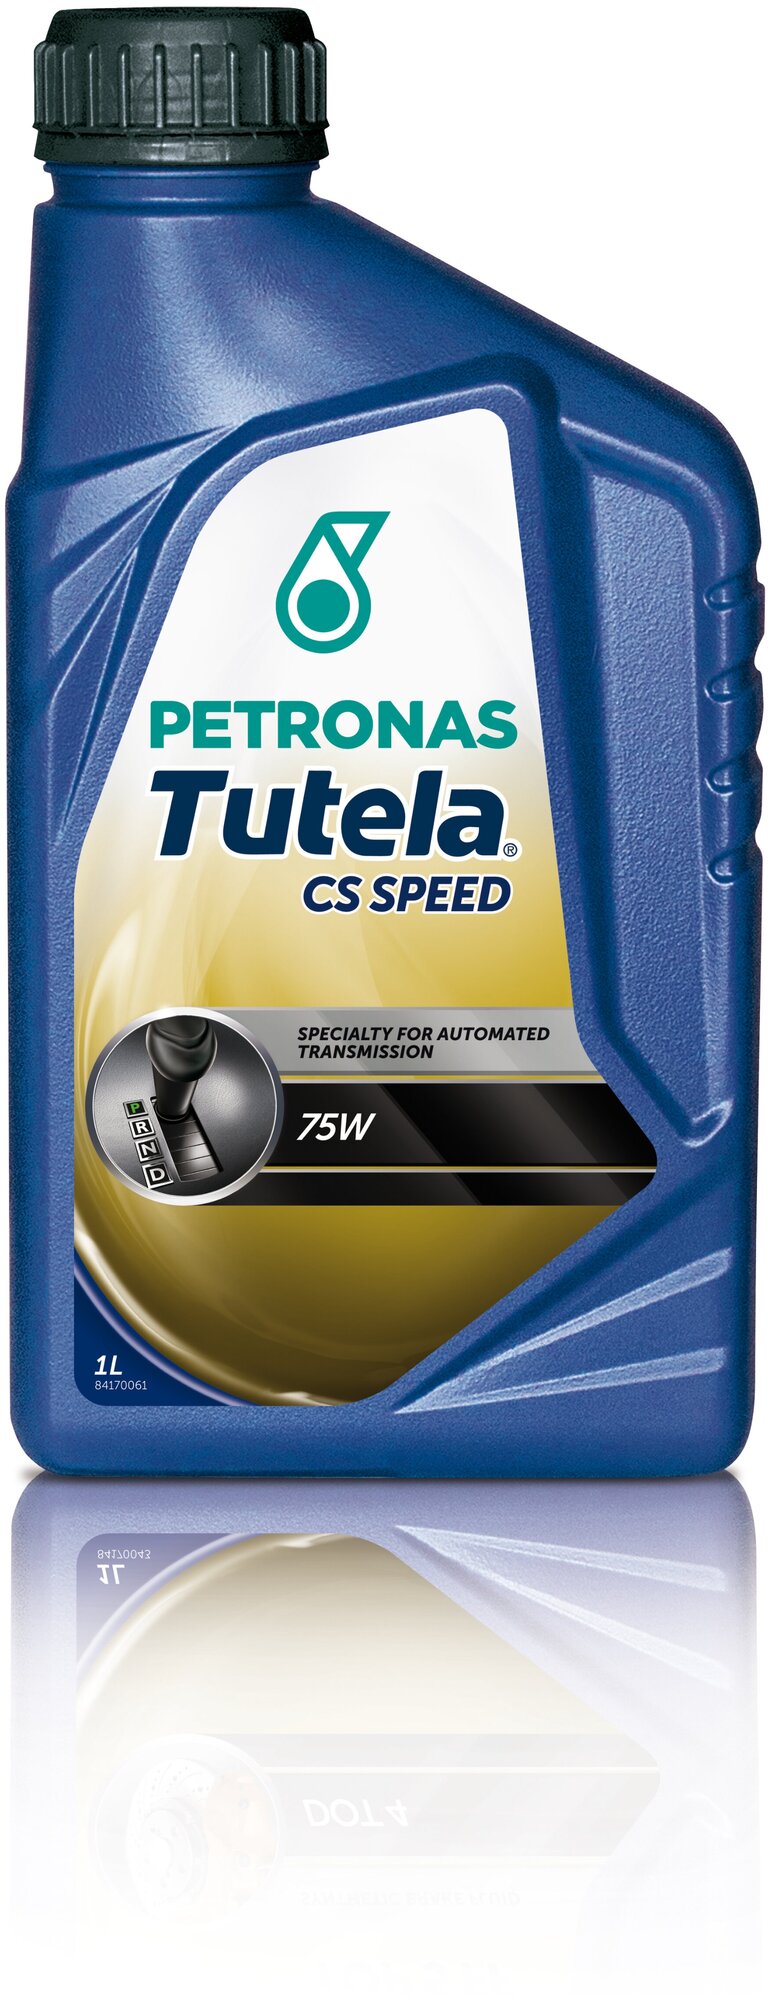 TUTELA (チュテラ) CS SPEED 75W 1L 59059128 通販